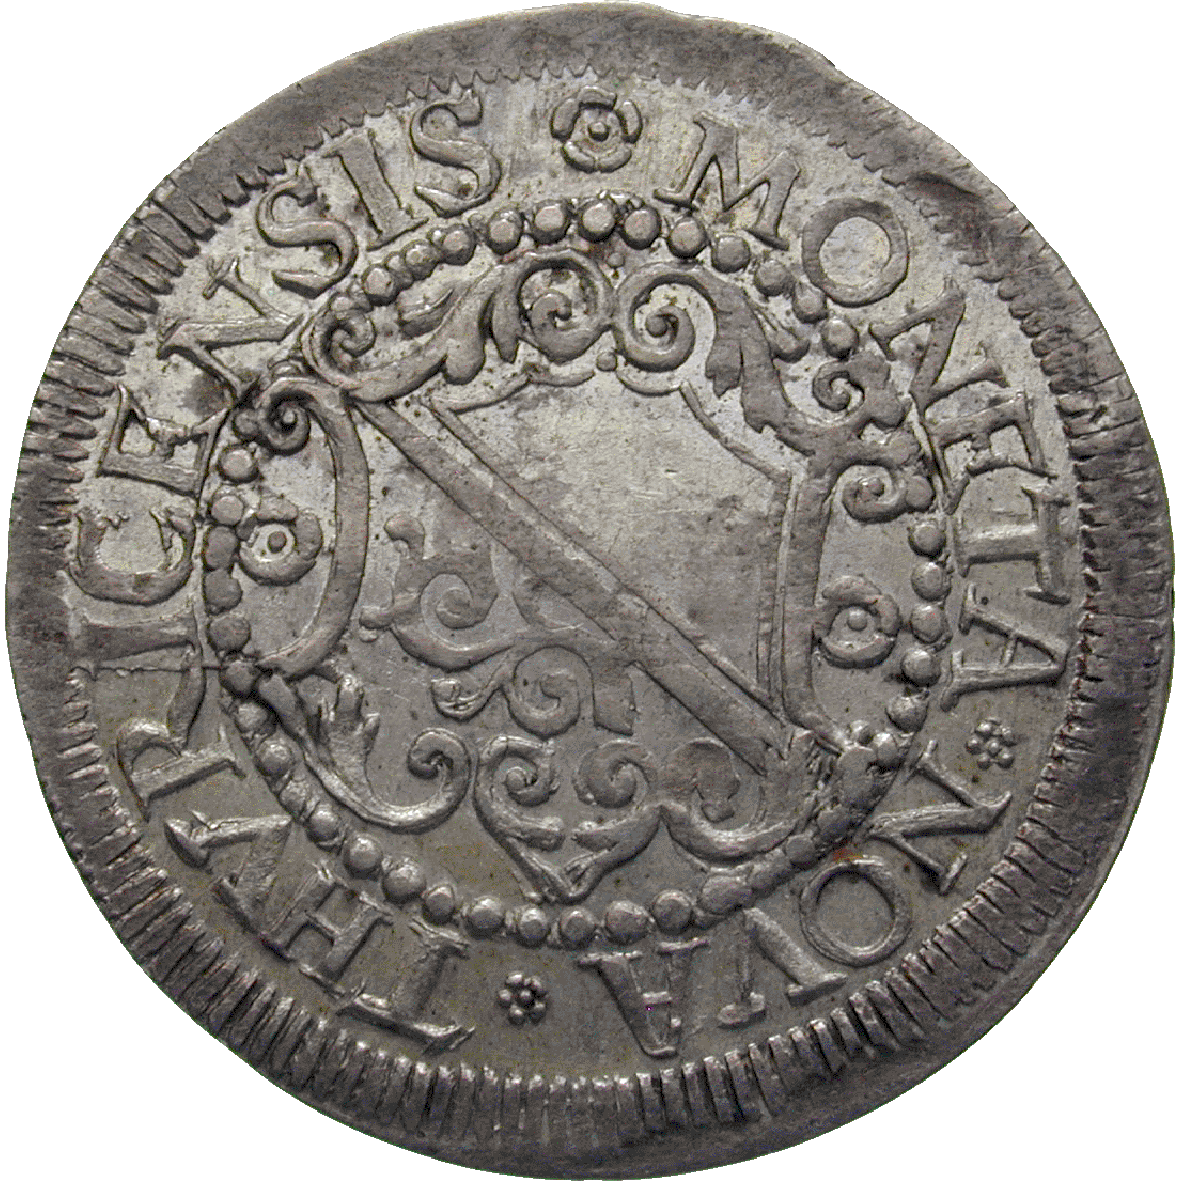 Republik Zürich, 10 Schilling 1677 (obverse)